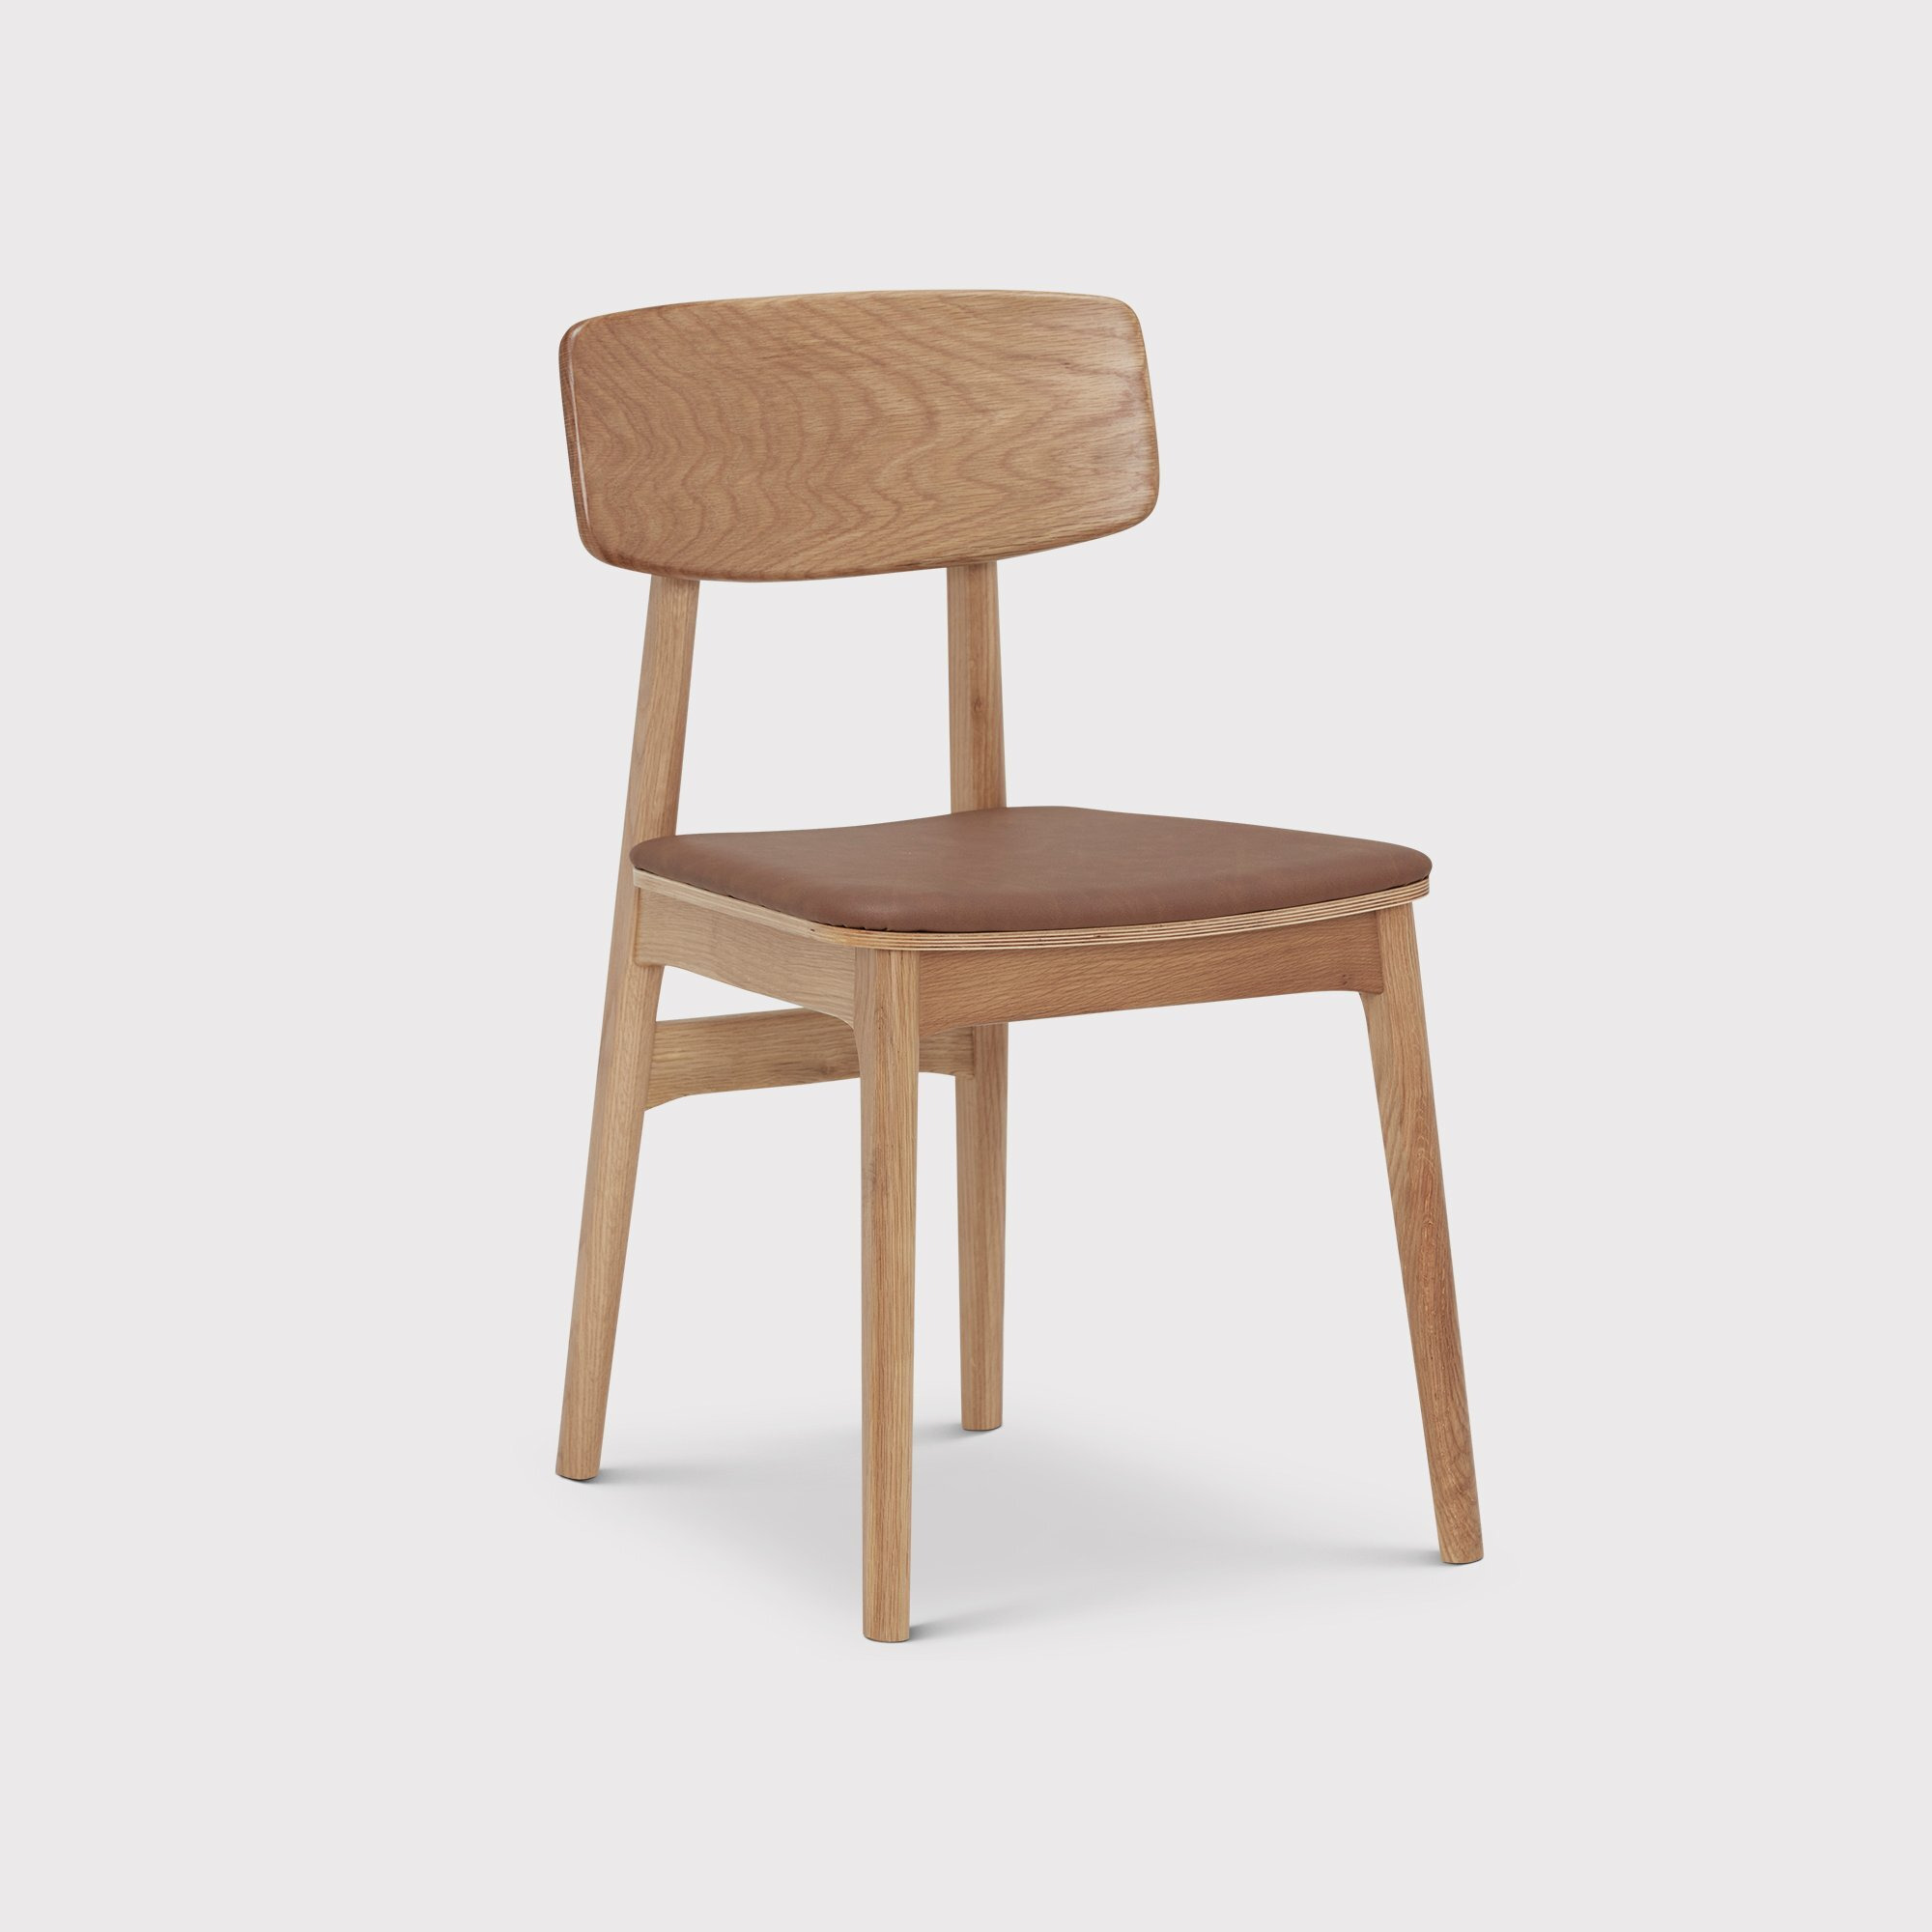 Tatum Livo Dining Chair, Wood - Barker & Stonehouse - image 1